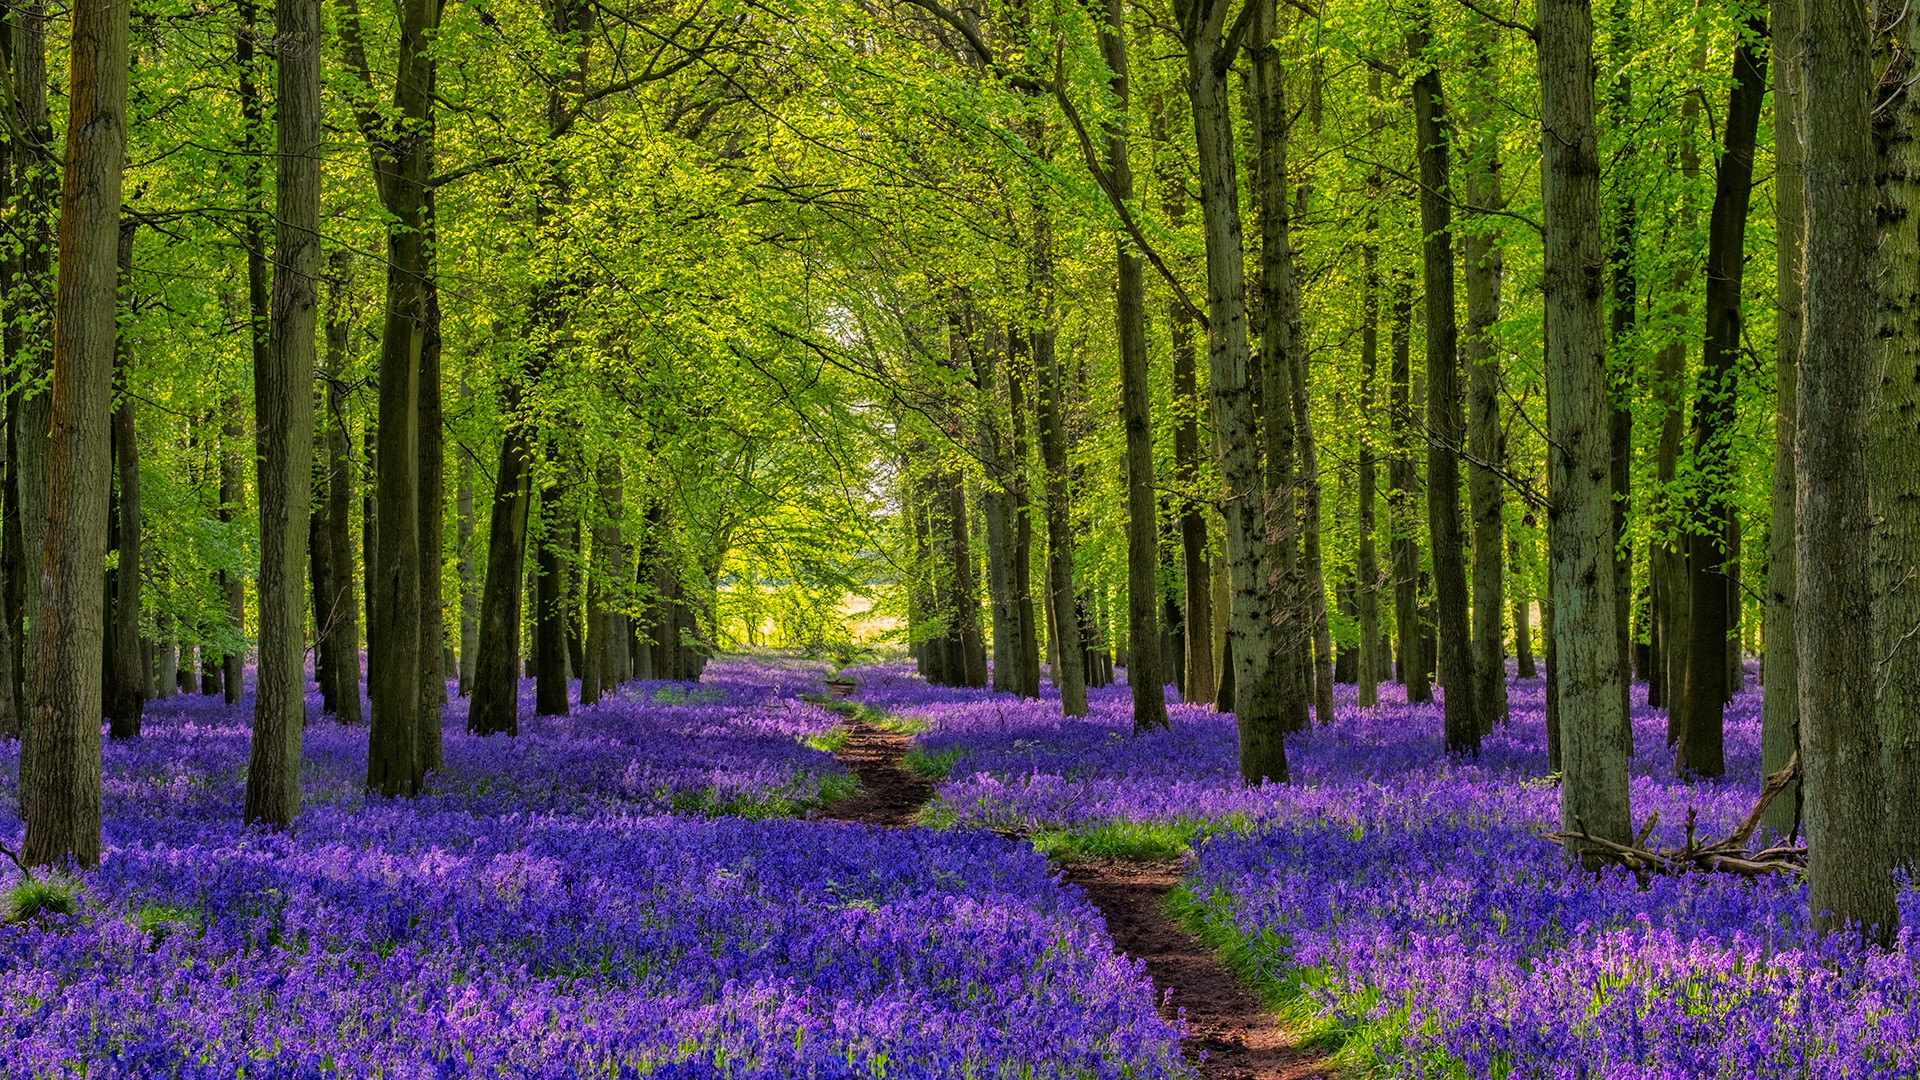 General 1920x1080 nature landscape trees forest plants walkway flowers purple flowers bluebells England UK path